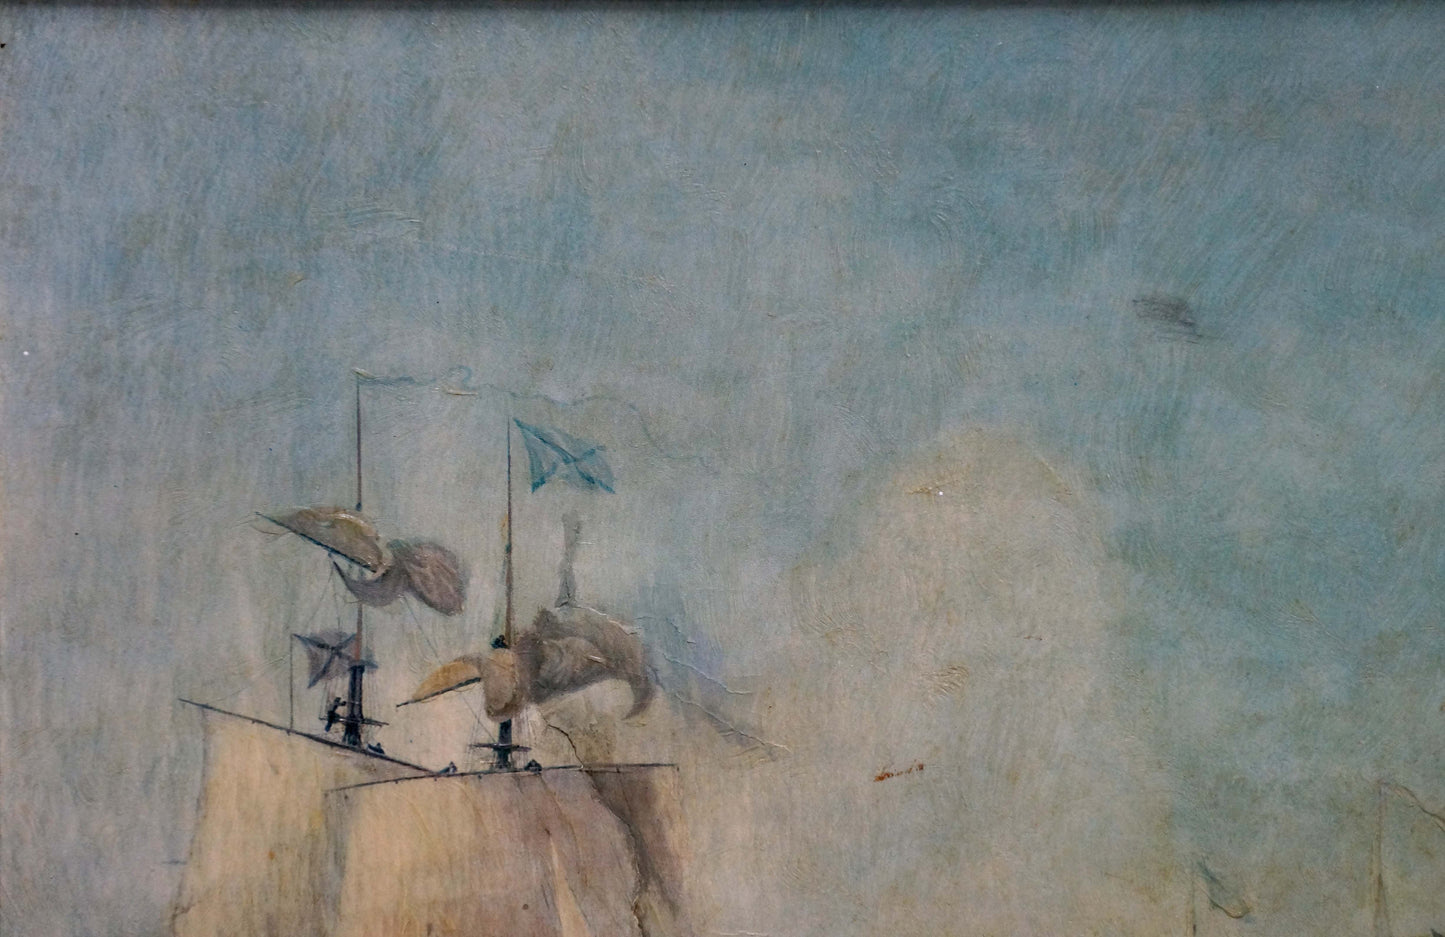 Oil painting Naval battles